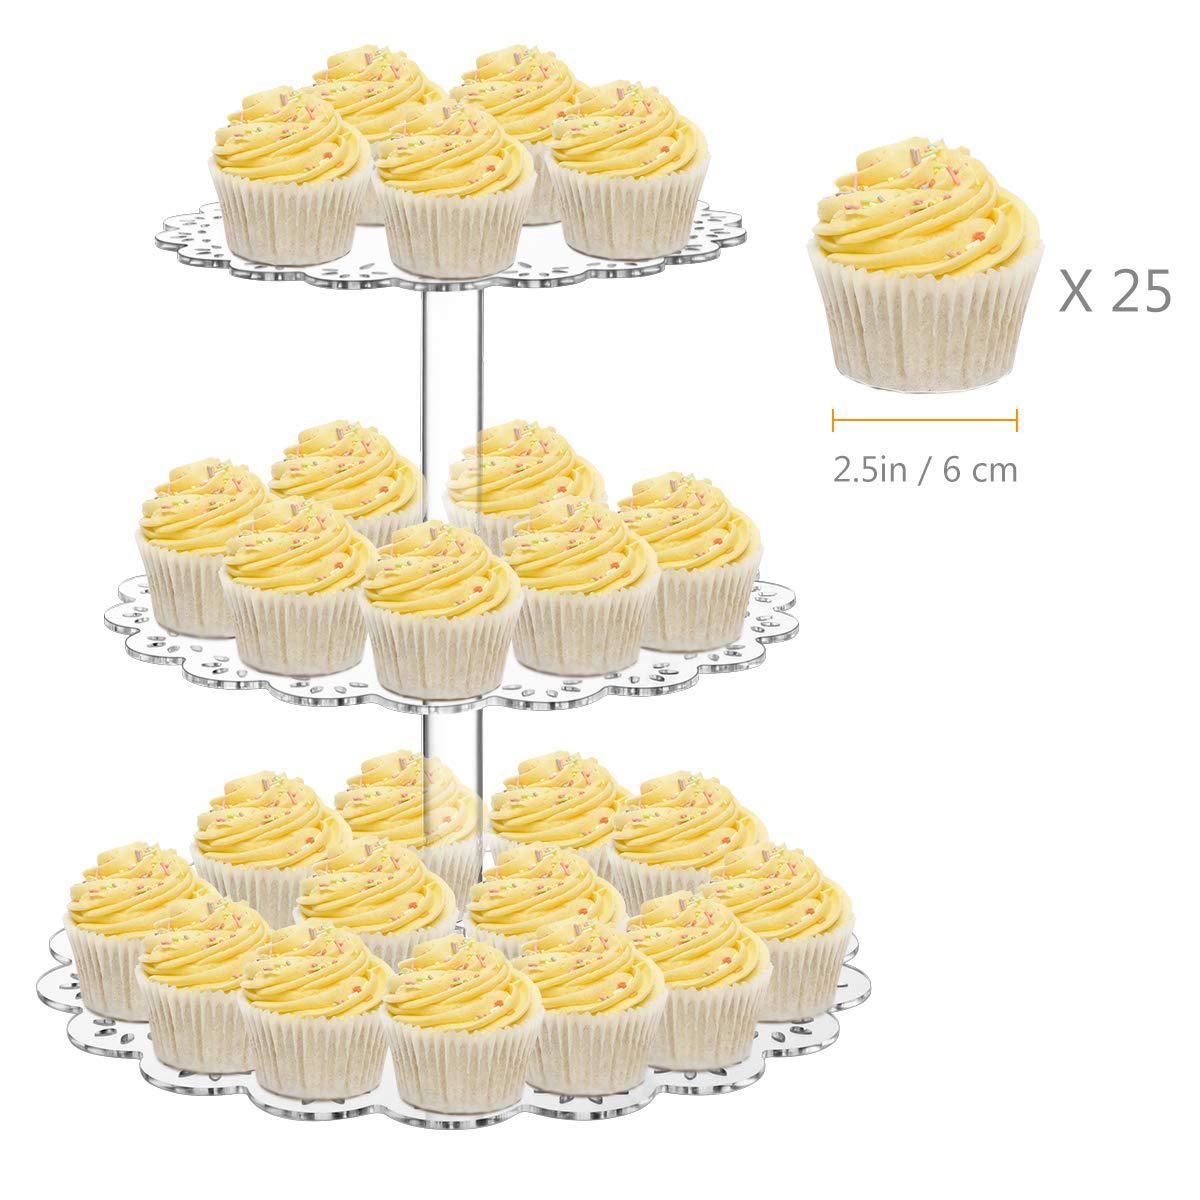 3-Tier-Acrylic-Cake-Stand-Storage-Rack-Dessert-Display-Holder-Wedding-Party-Decorations-1563155